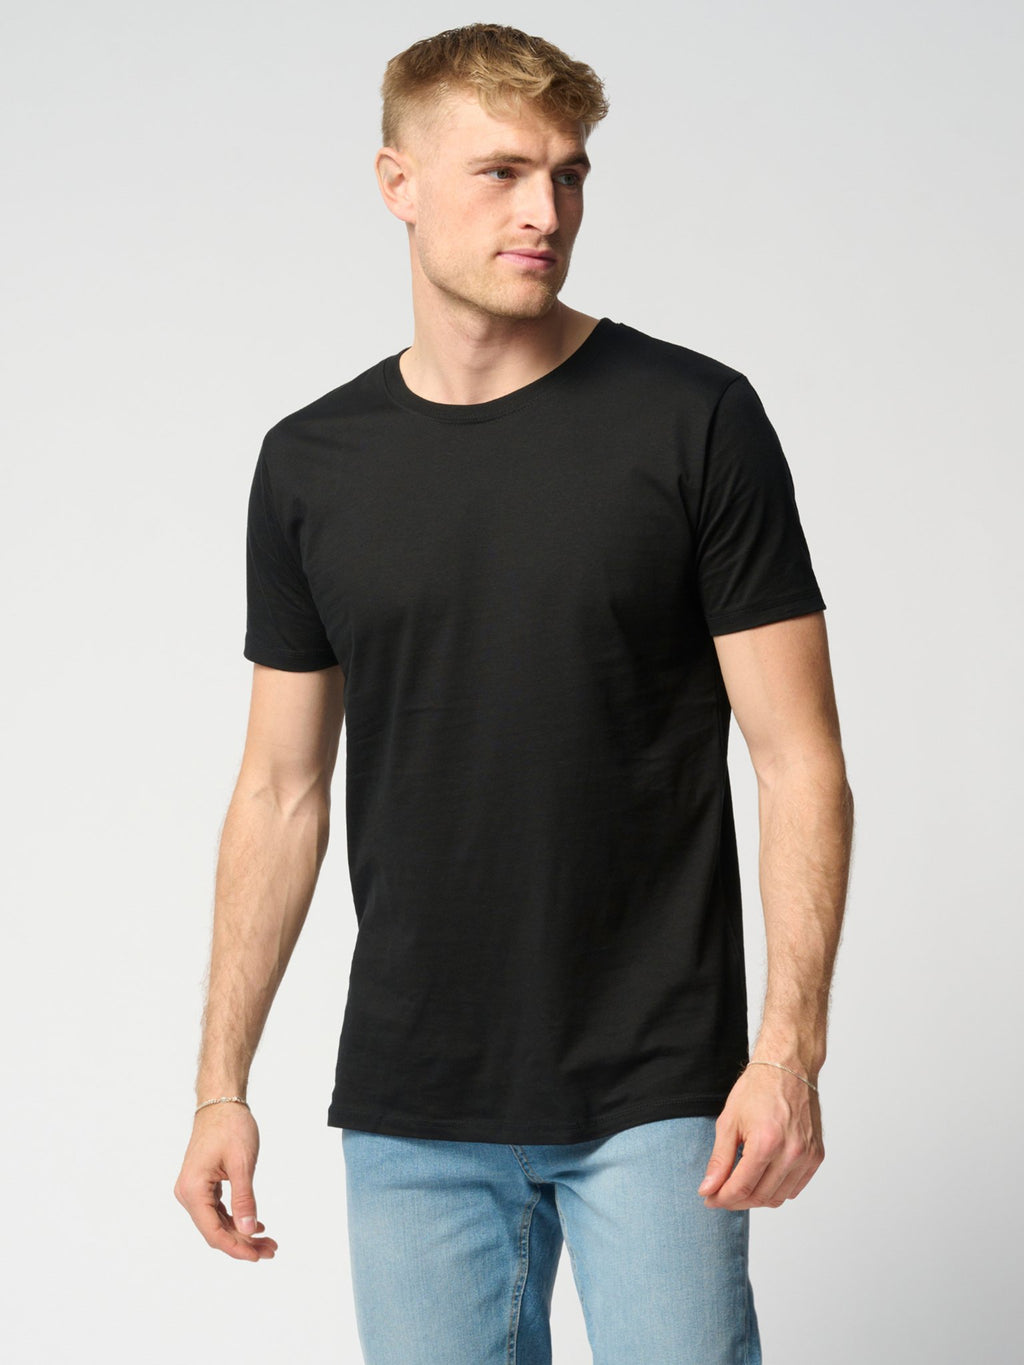 T-shirt musculaire - noir